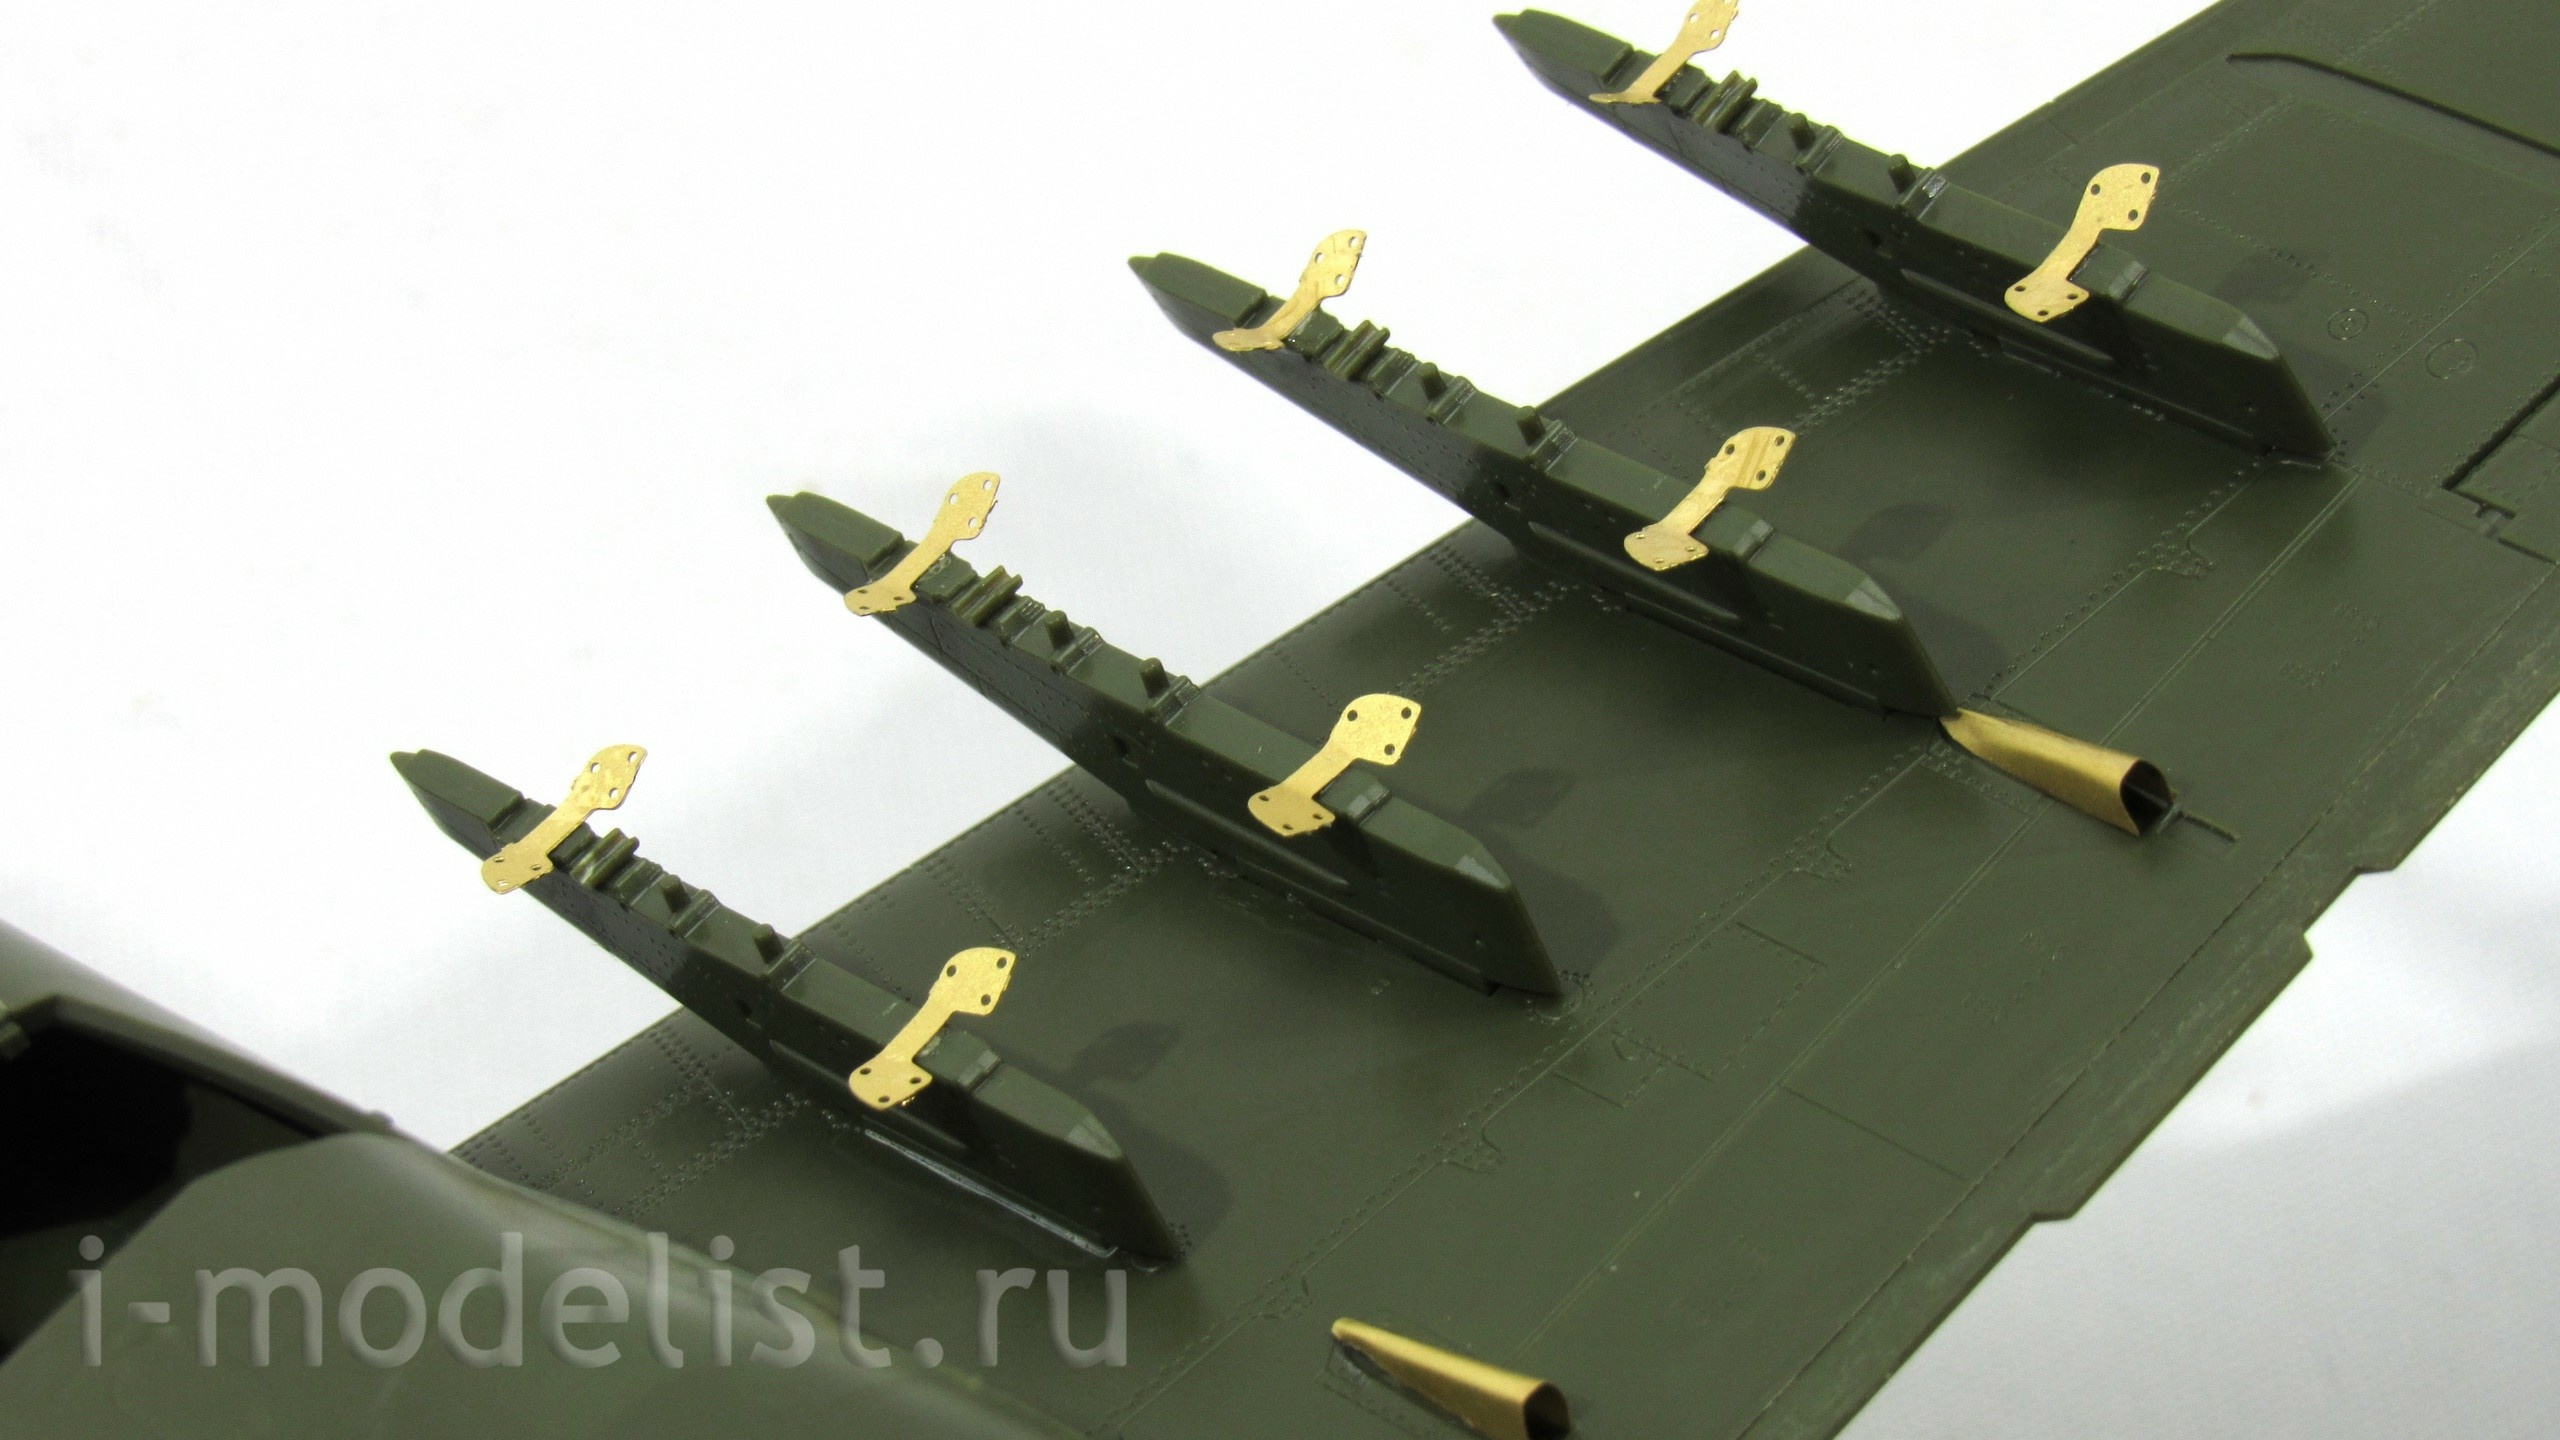 048033 Microdesign 1/48 Photo Etching Kit for Sukhoi-25 (Zvezda)